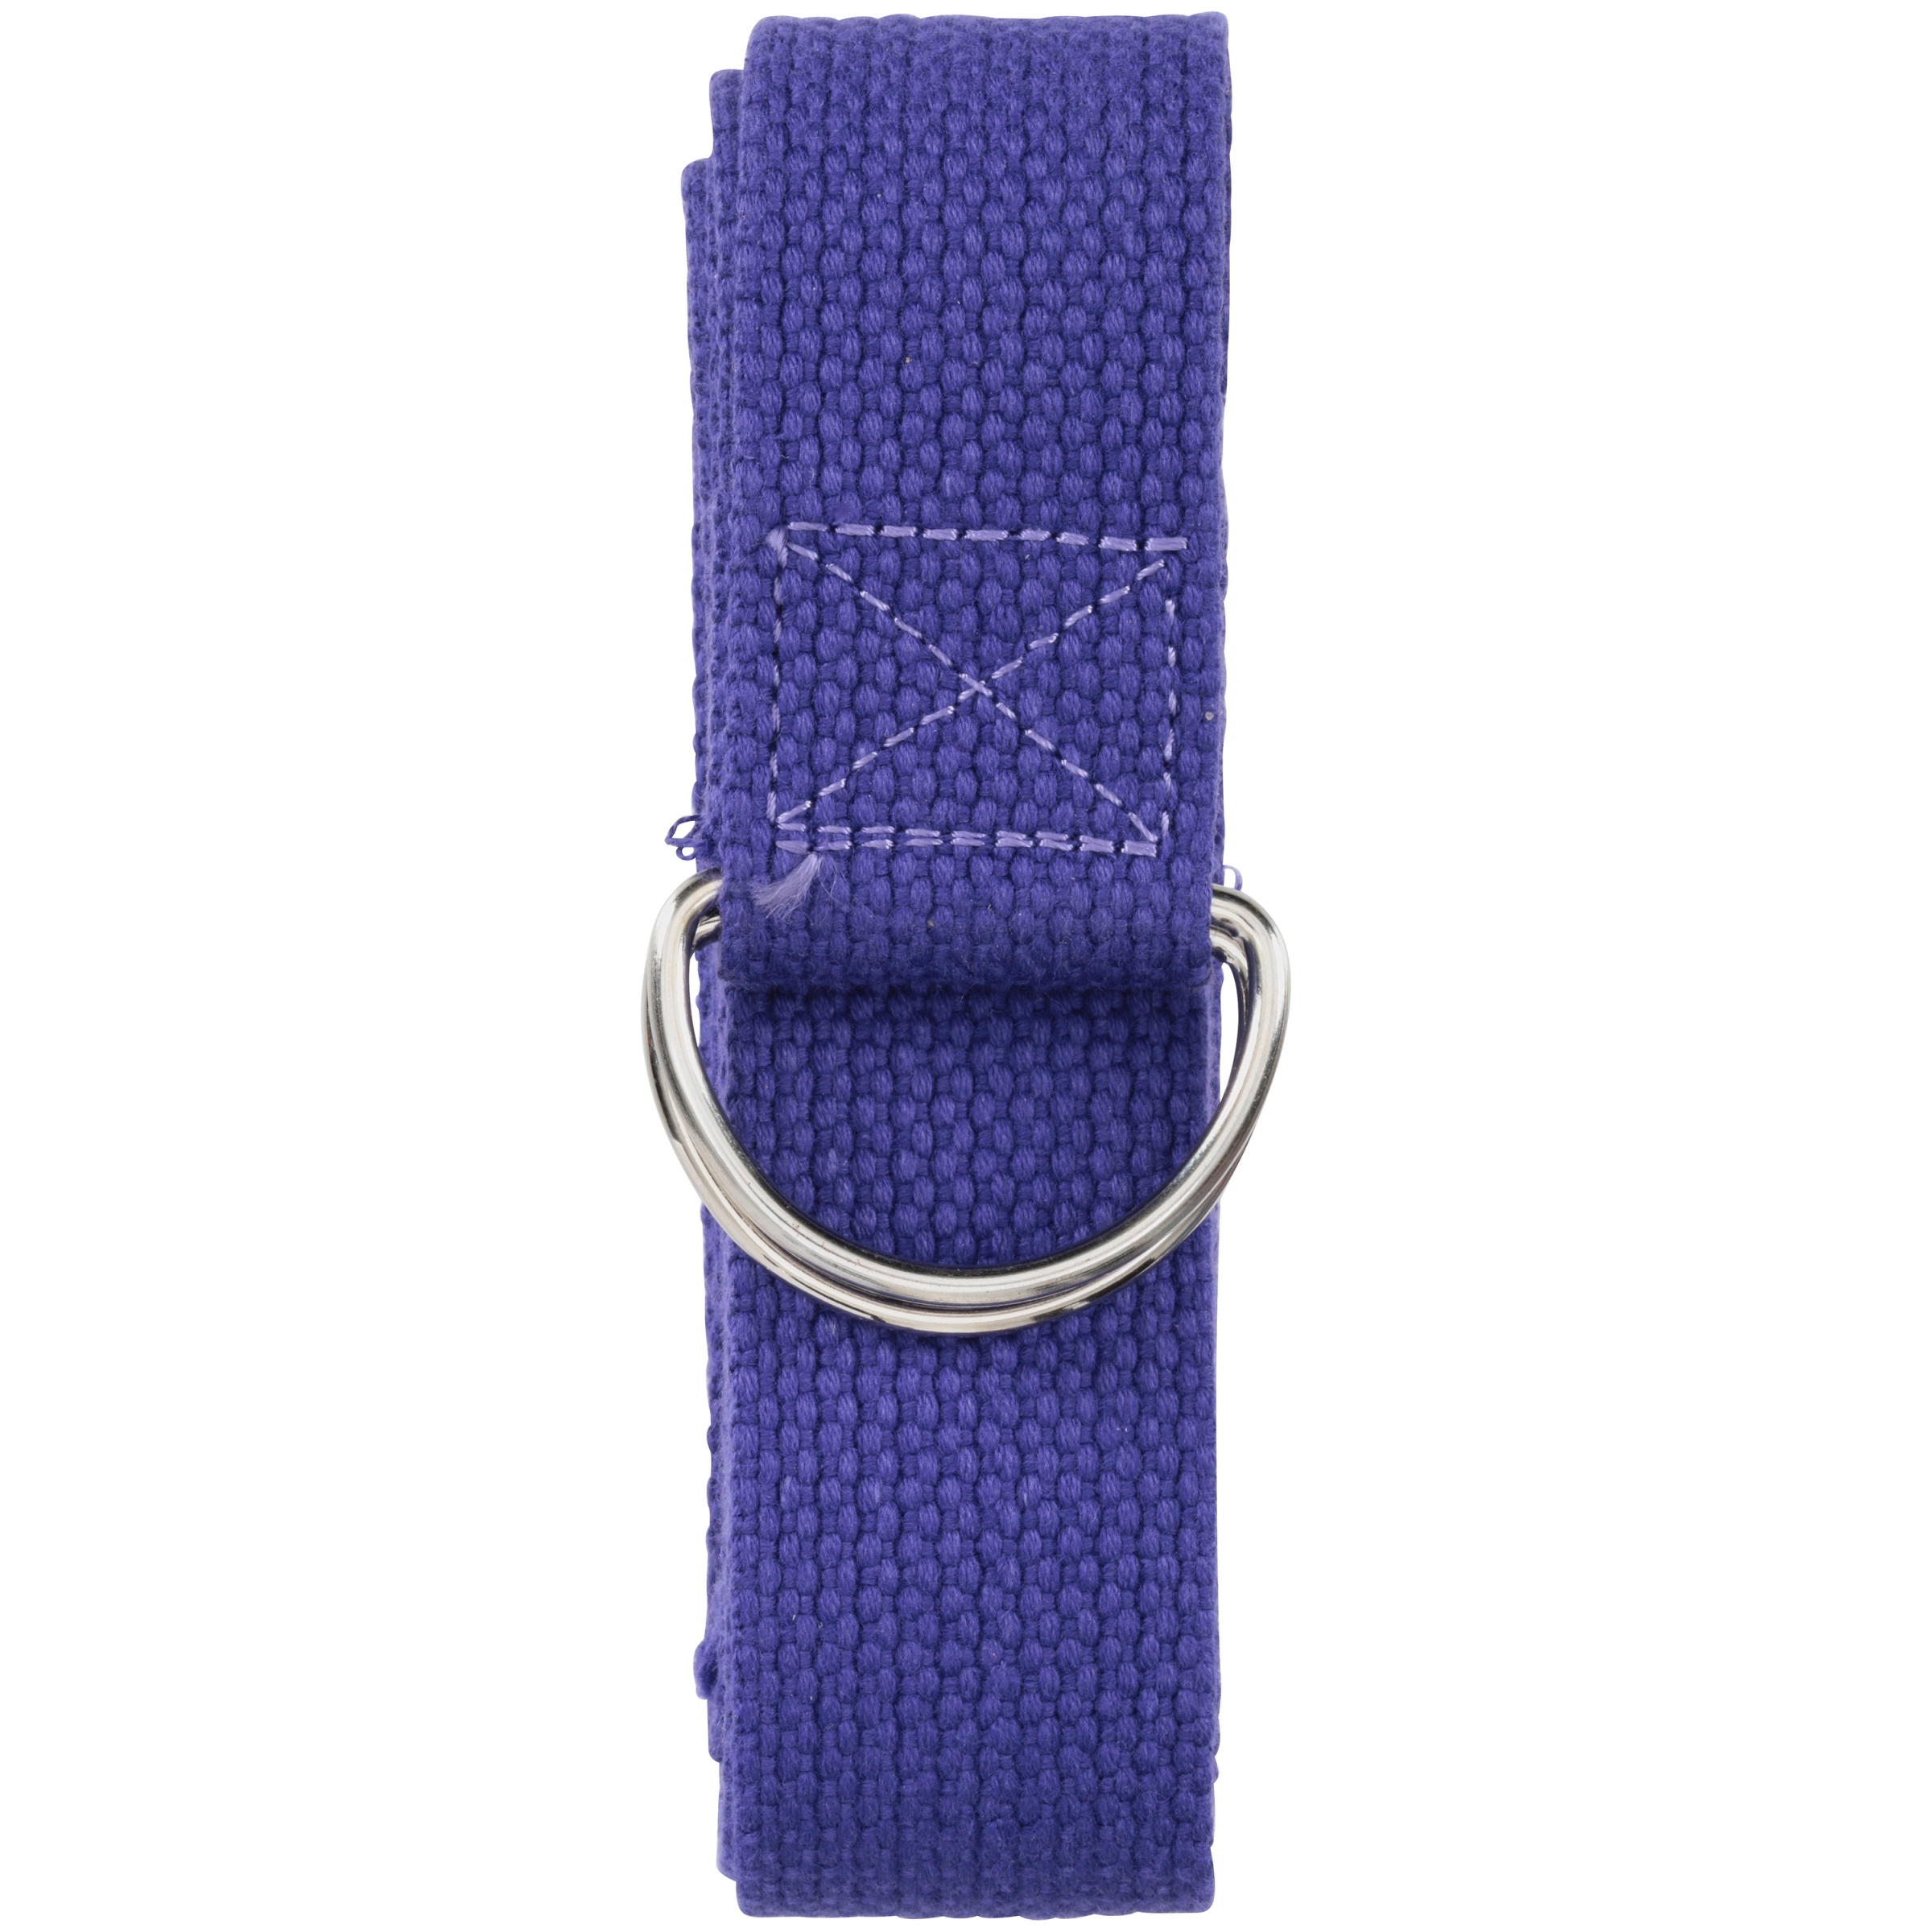 Gaiam Yoga Strap, 6 Ft, Purple - image 5 of 5